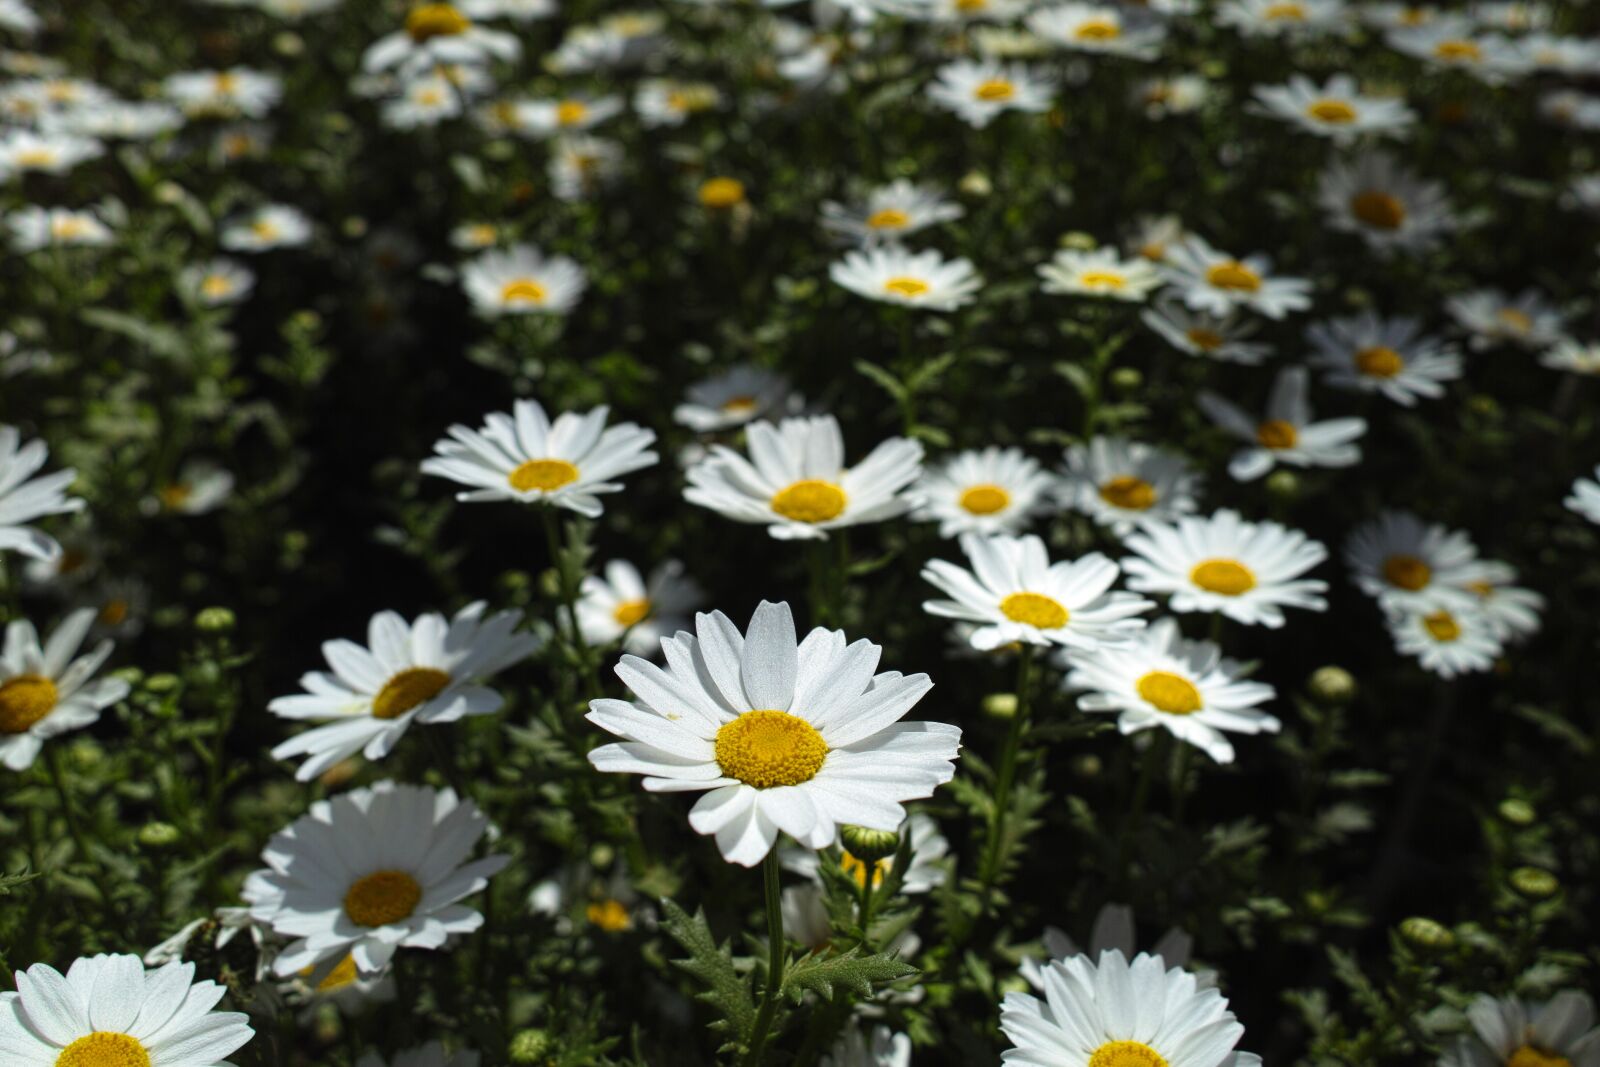 Sigma DP1 Merrill sample photo. Flower, daisy, garden photography